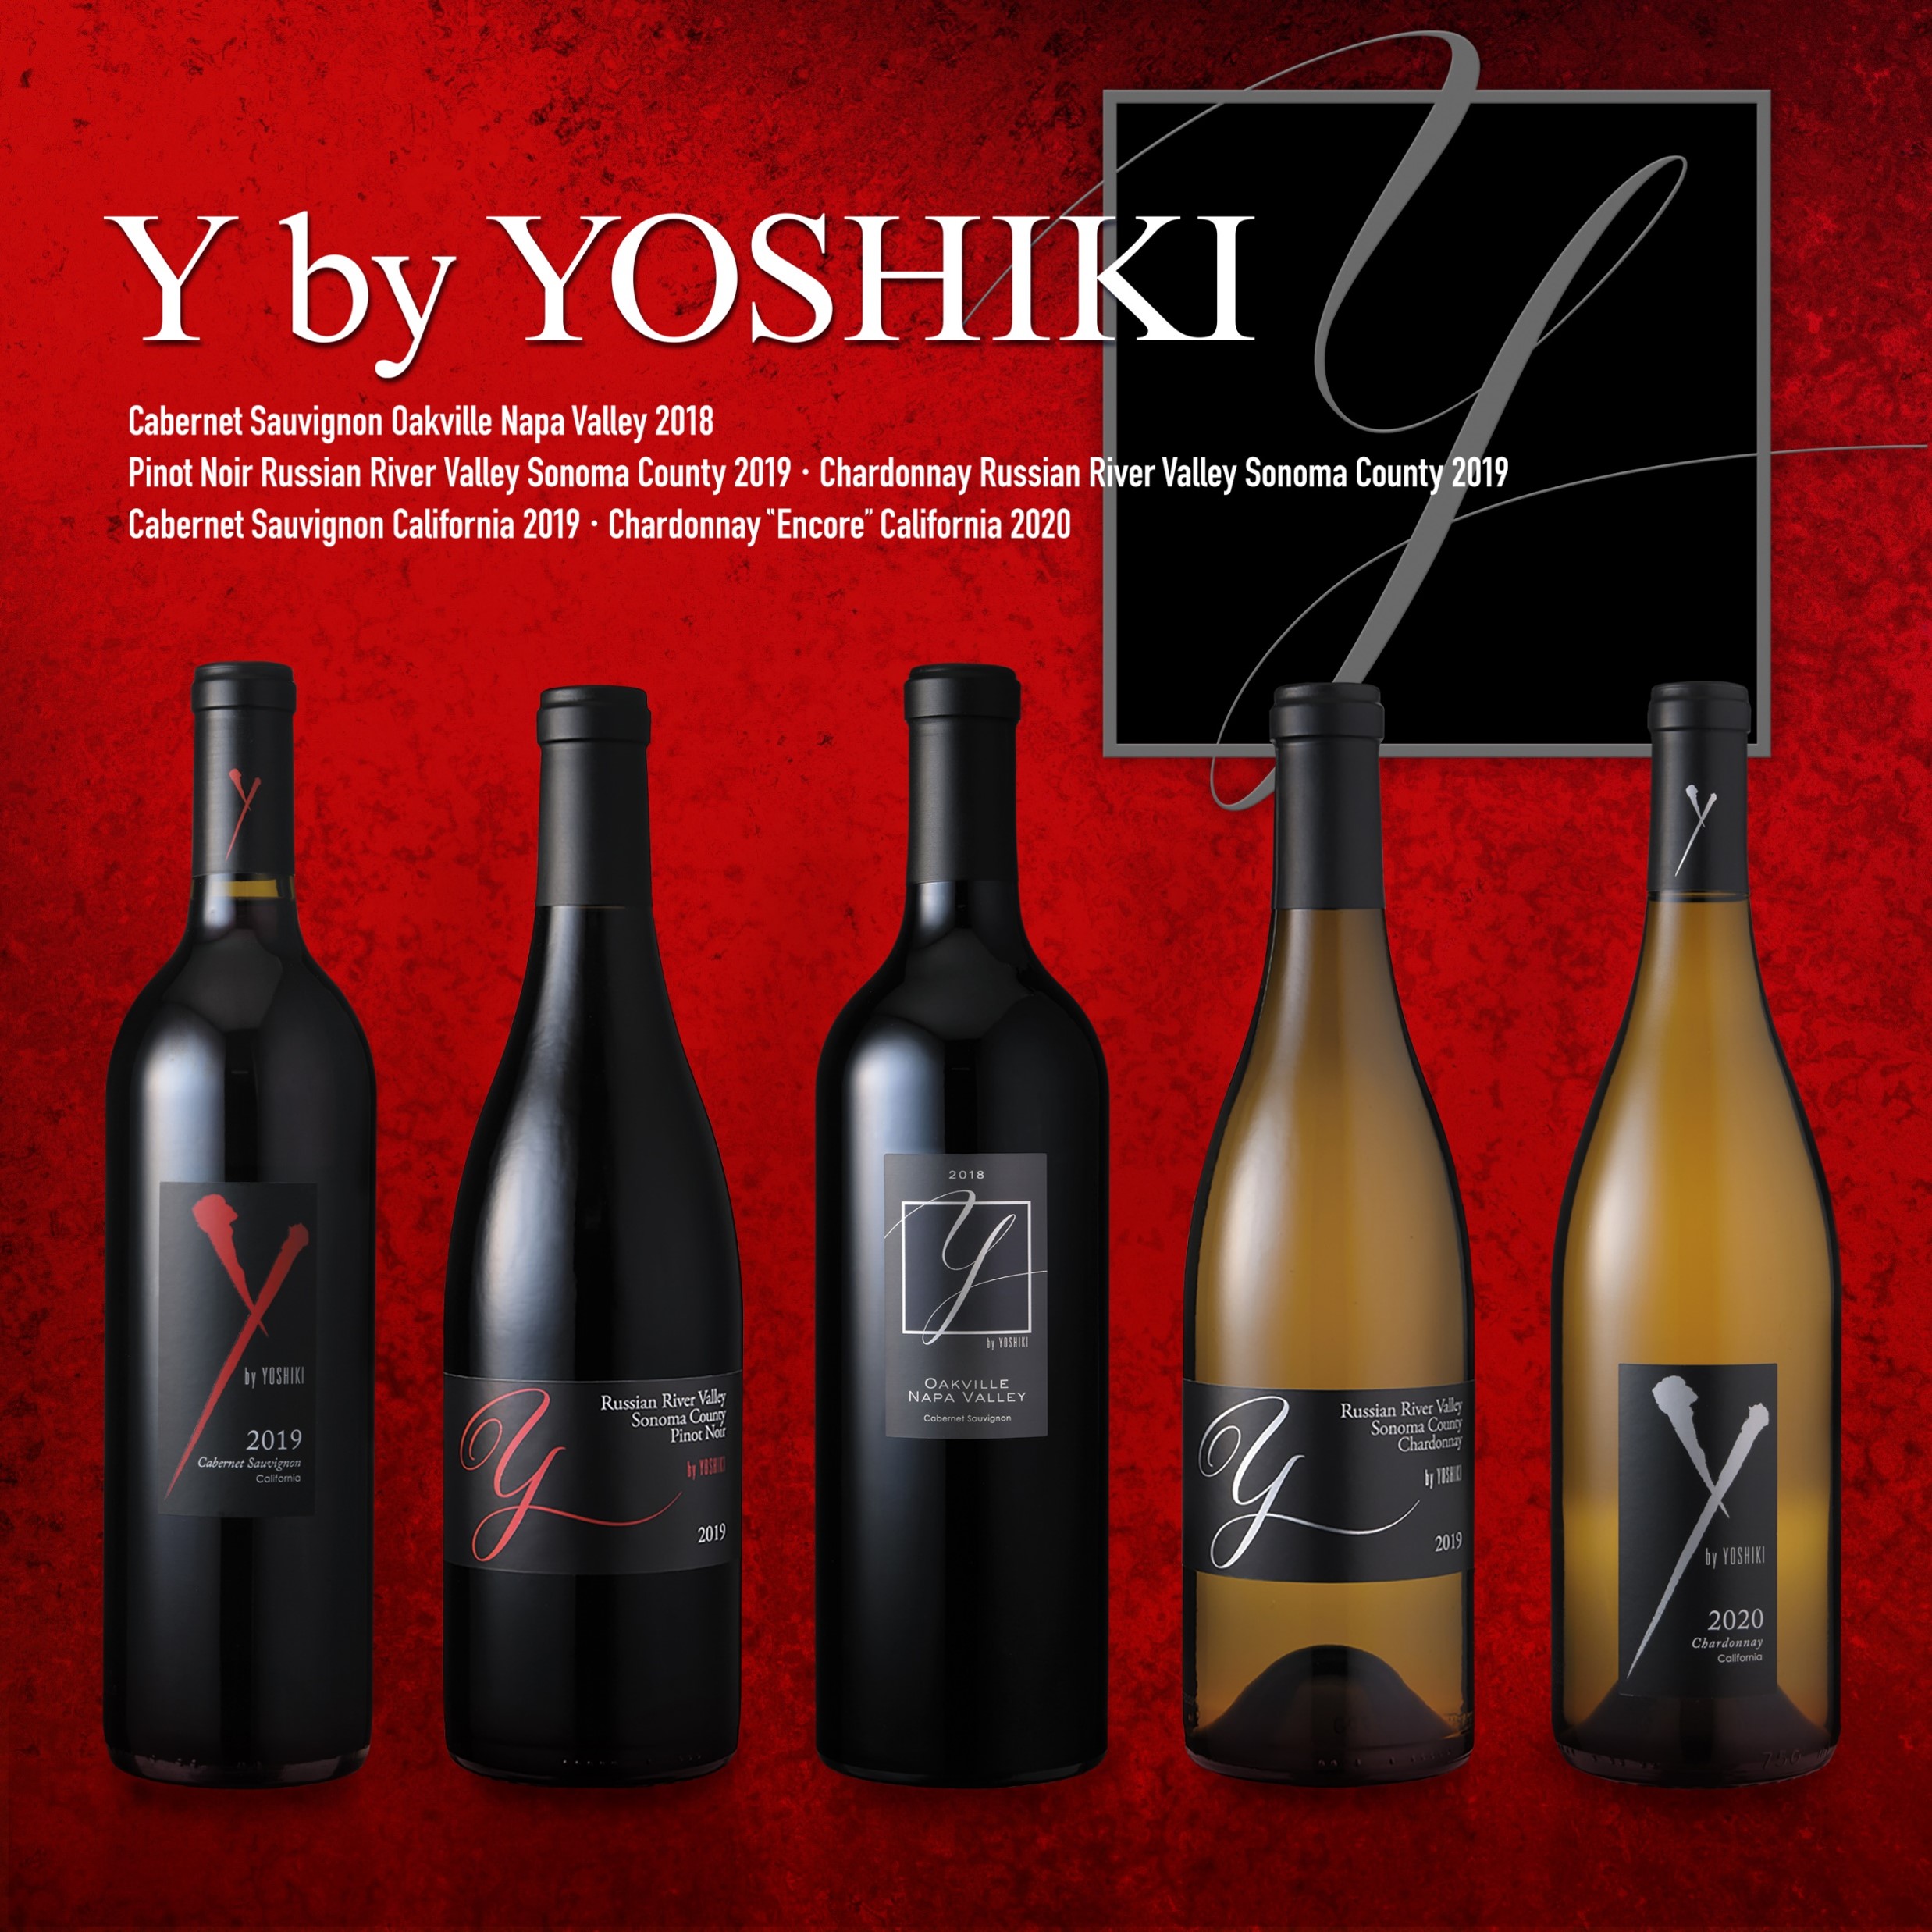 YOSHIKI ワイン-